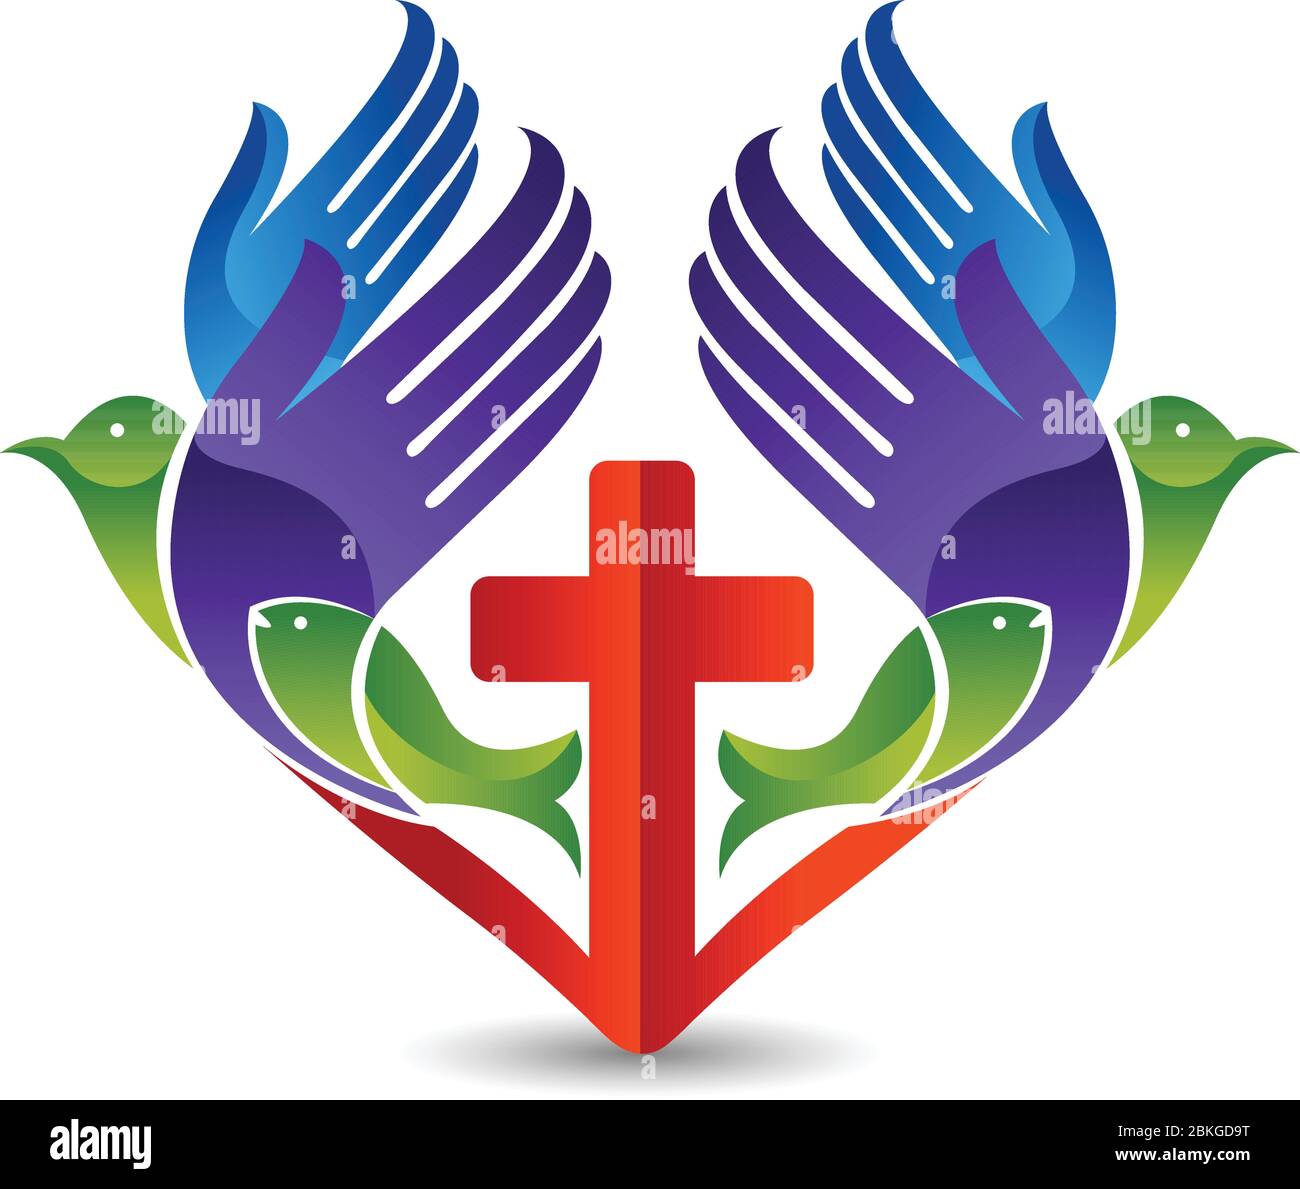 represents christian love logo Stock Vector